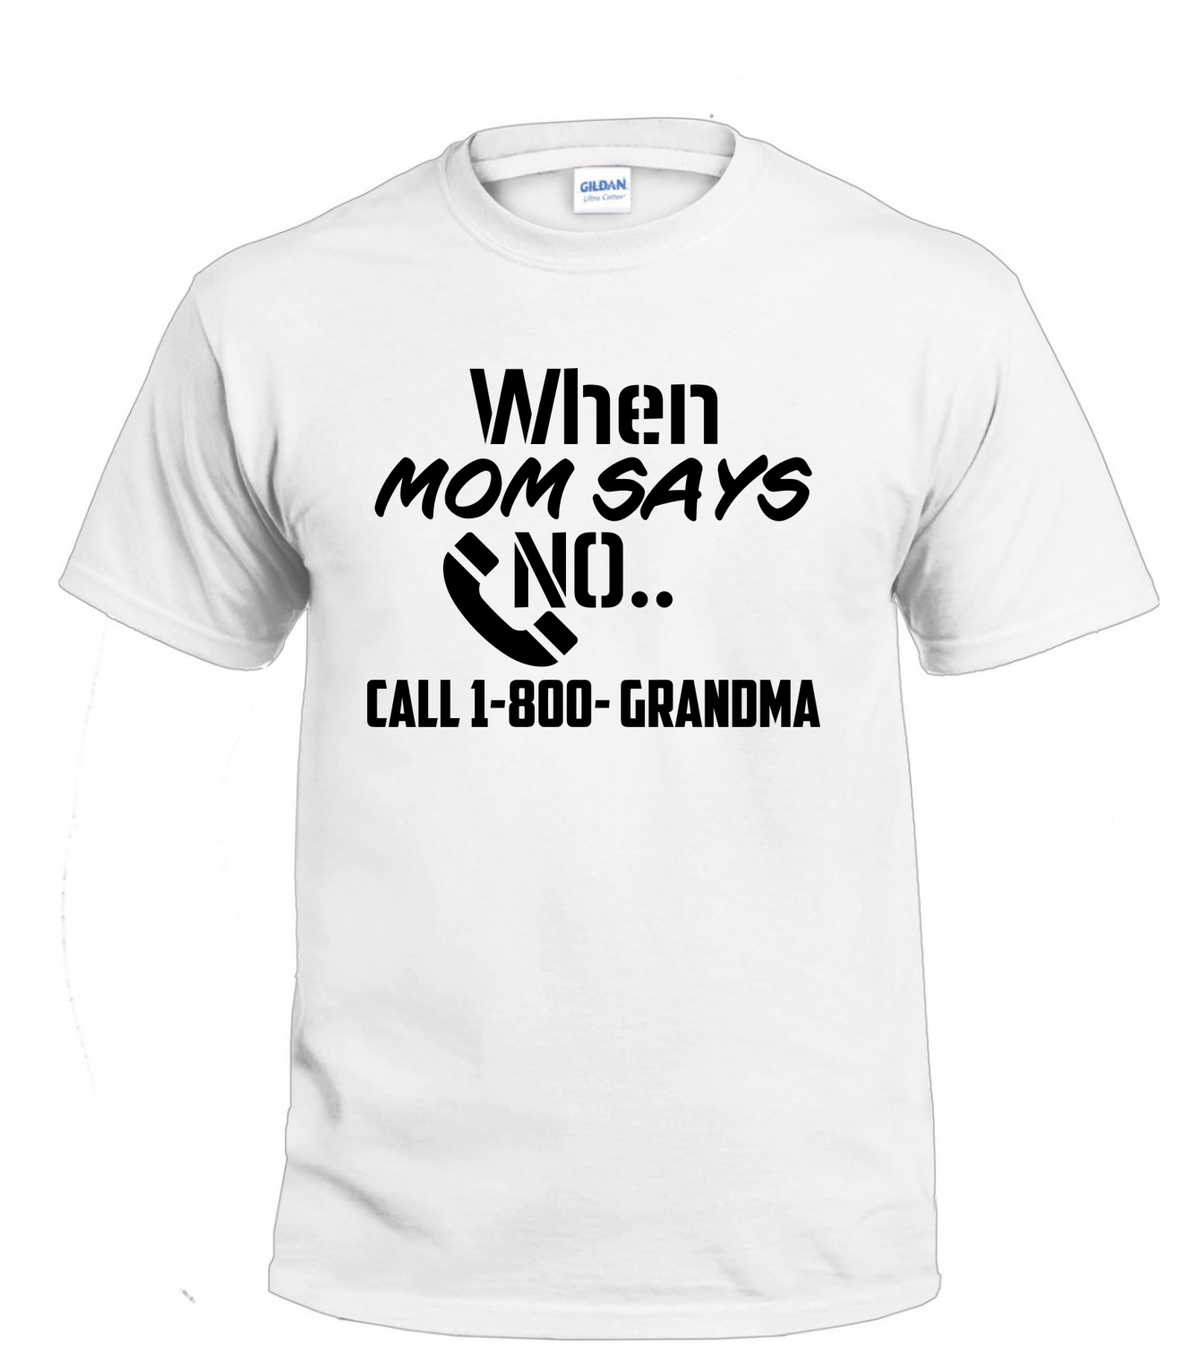 When Mom Says No Call 1-800-Grandma t-shirt